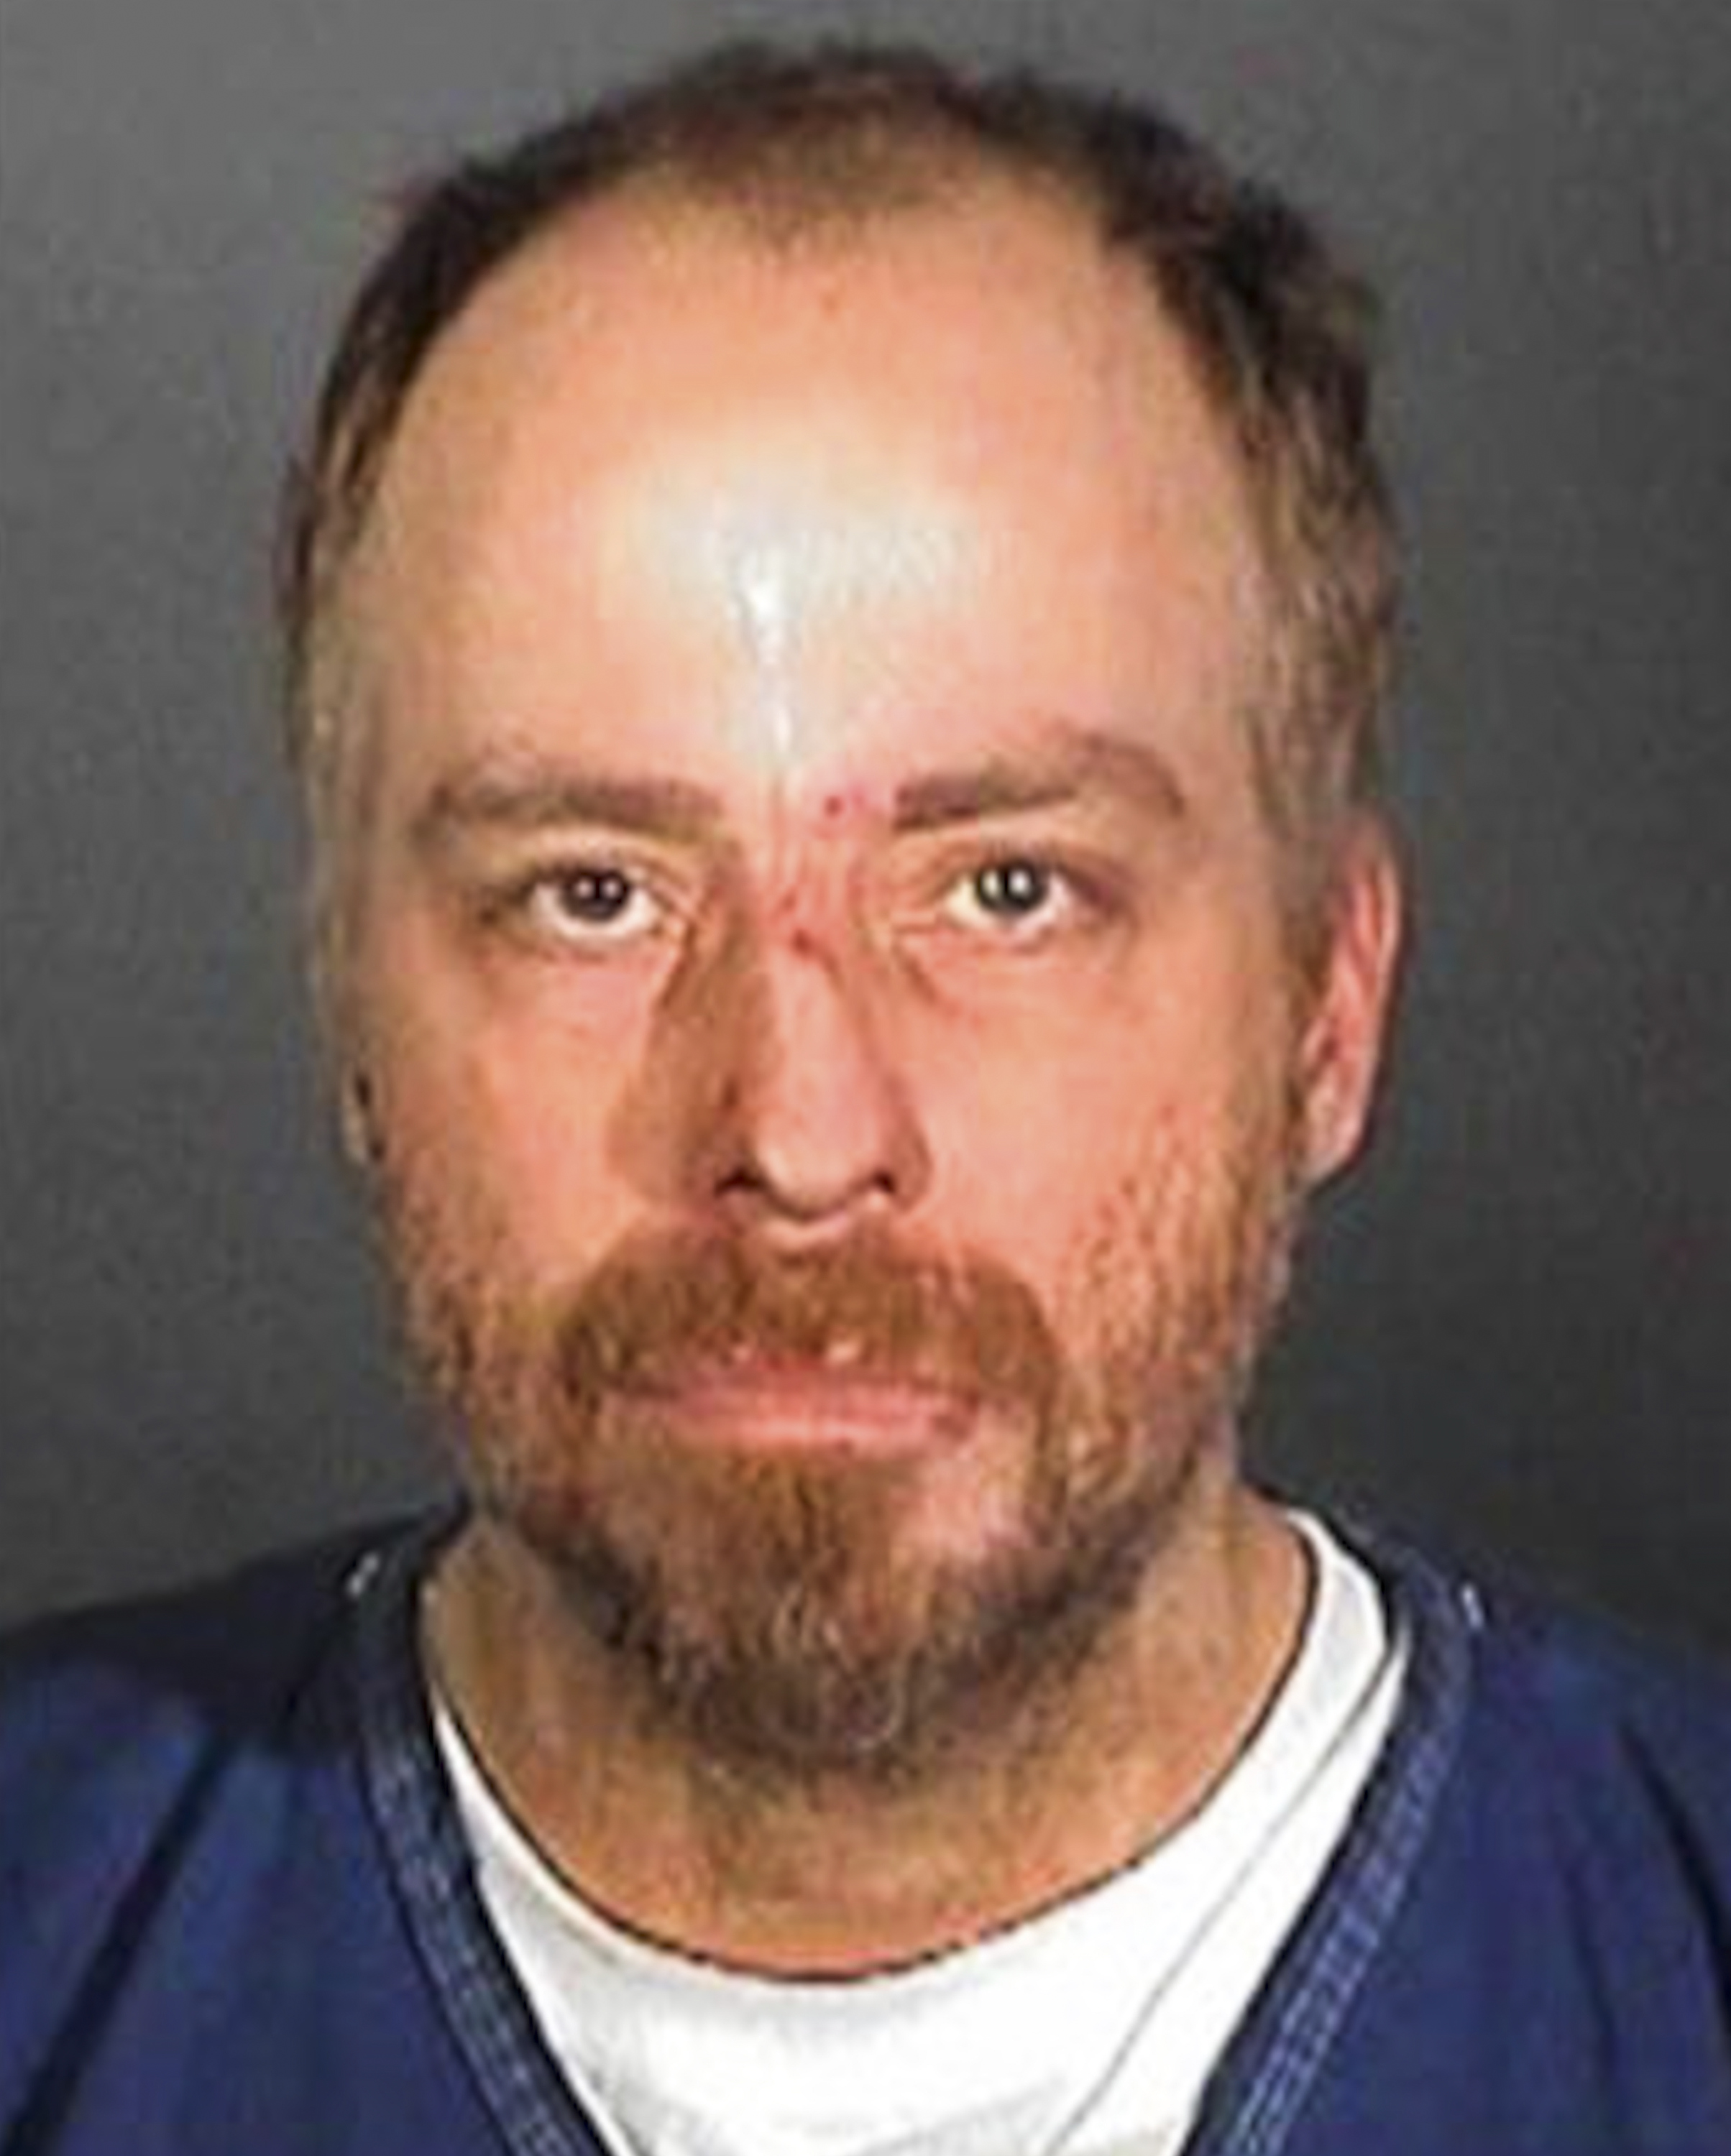 Leif Garrett's mugshot after his arrest in 2005. | Source: Getty Images